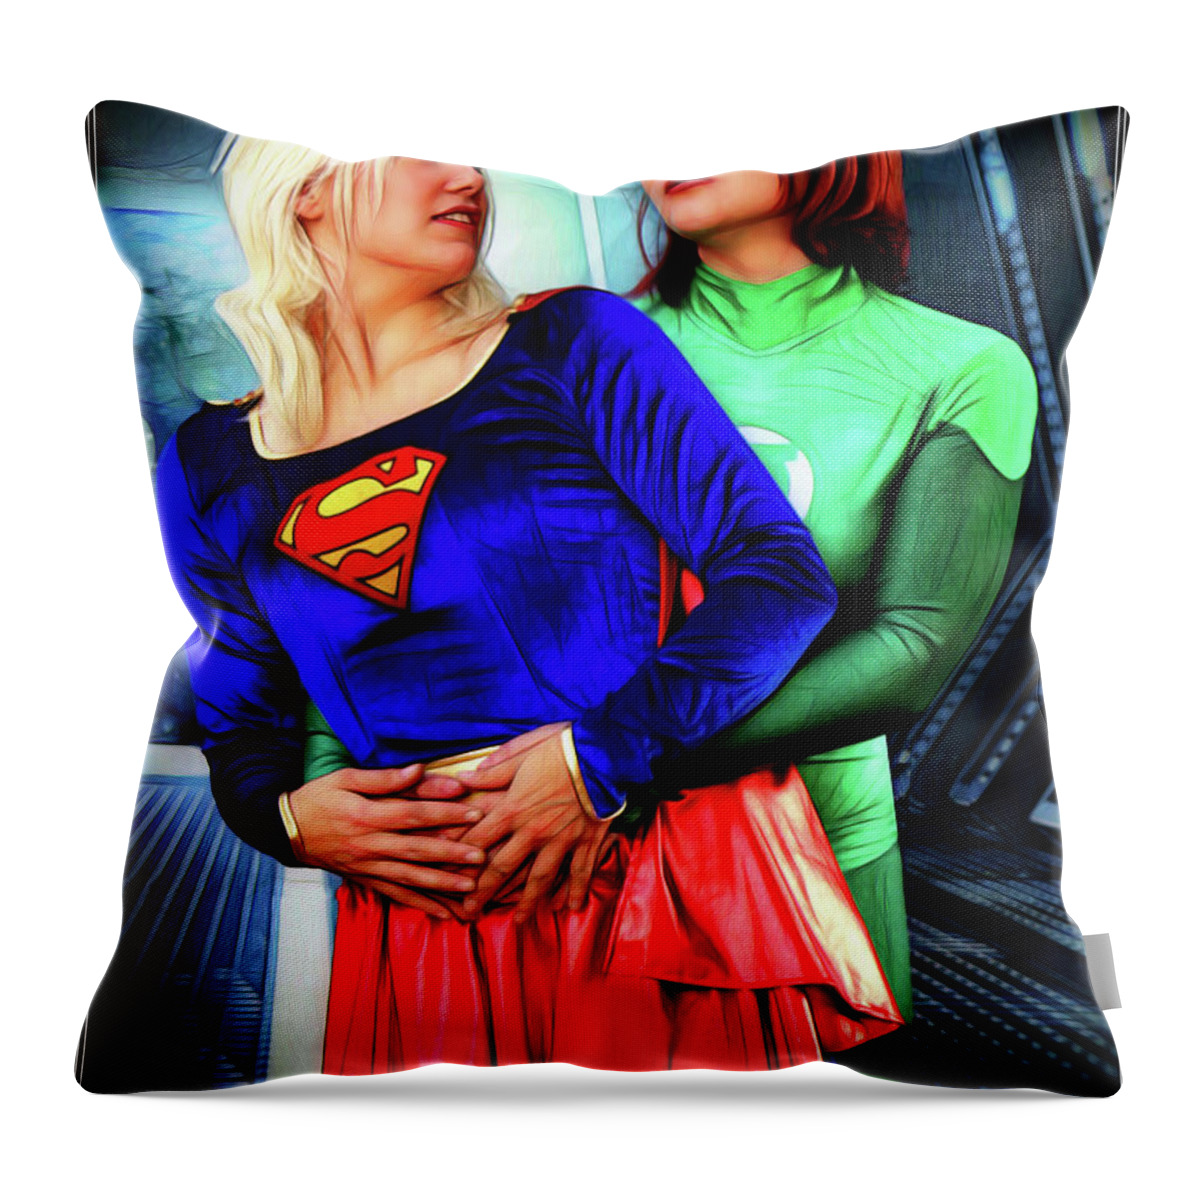 Super Throw Pillow featuring the photograph Super Friends by Jon Volden